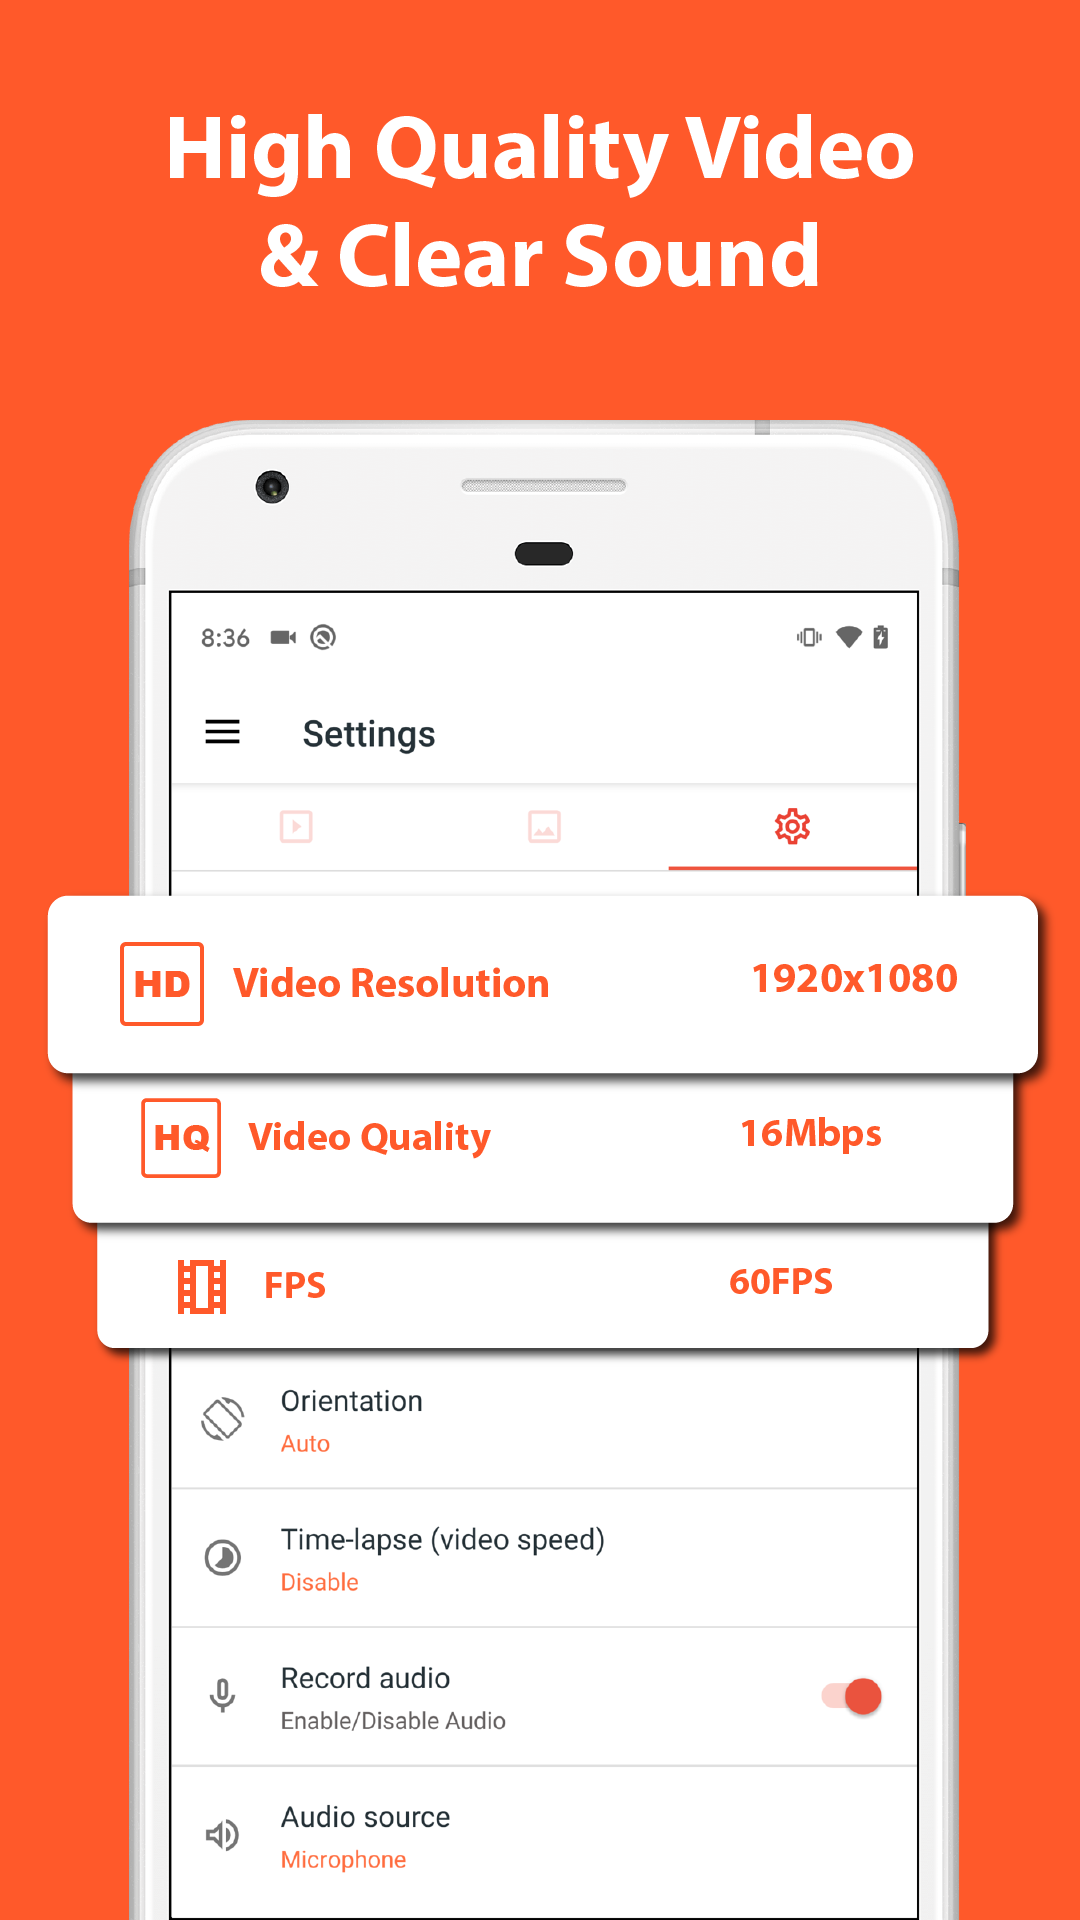 Android application AZ Screen Recorder - Video Recorder, Livestream screenshort